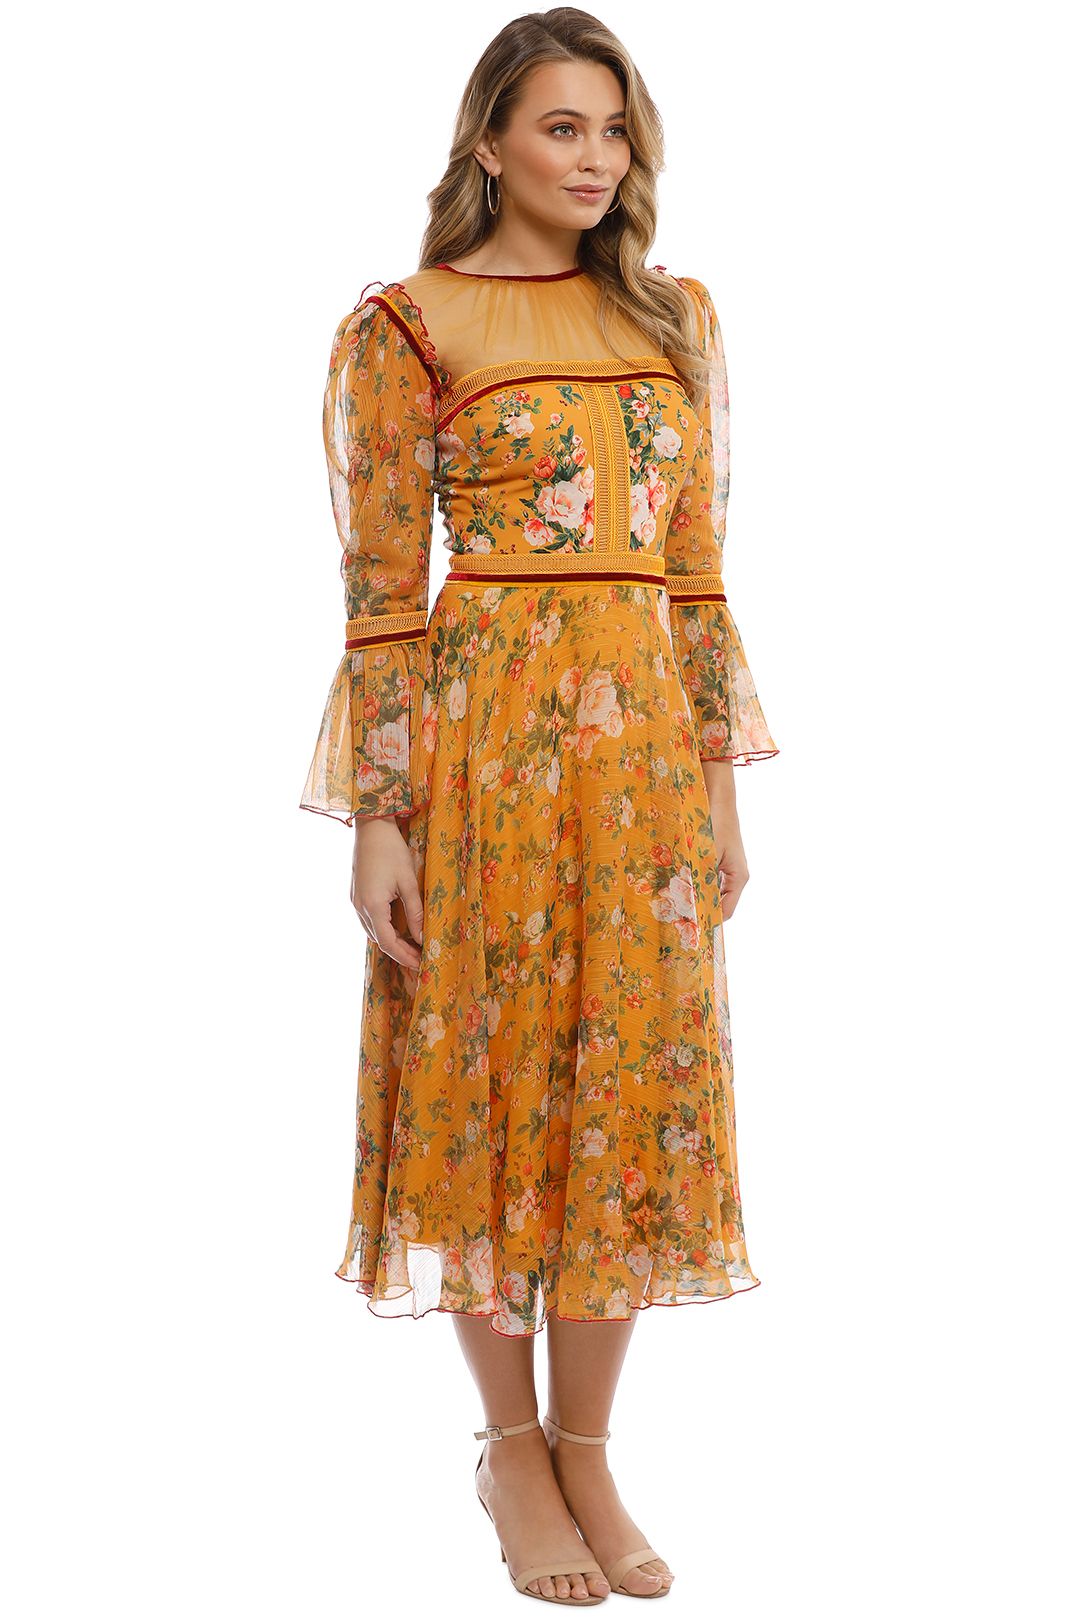 Tadashi Shoji - Toussaint Tea Length Dress - Mustard Yellow - Side